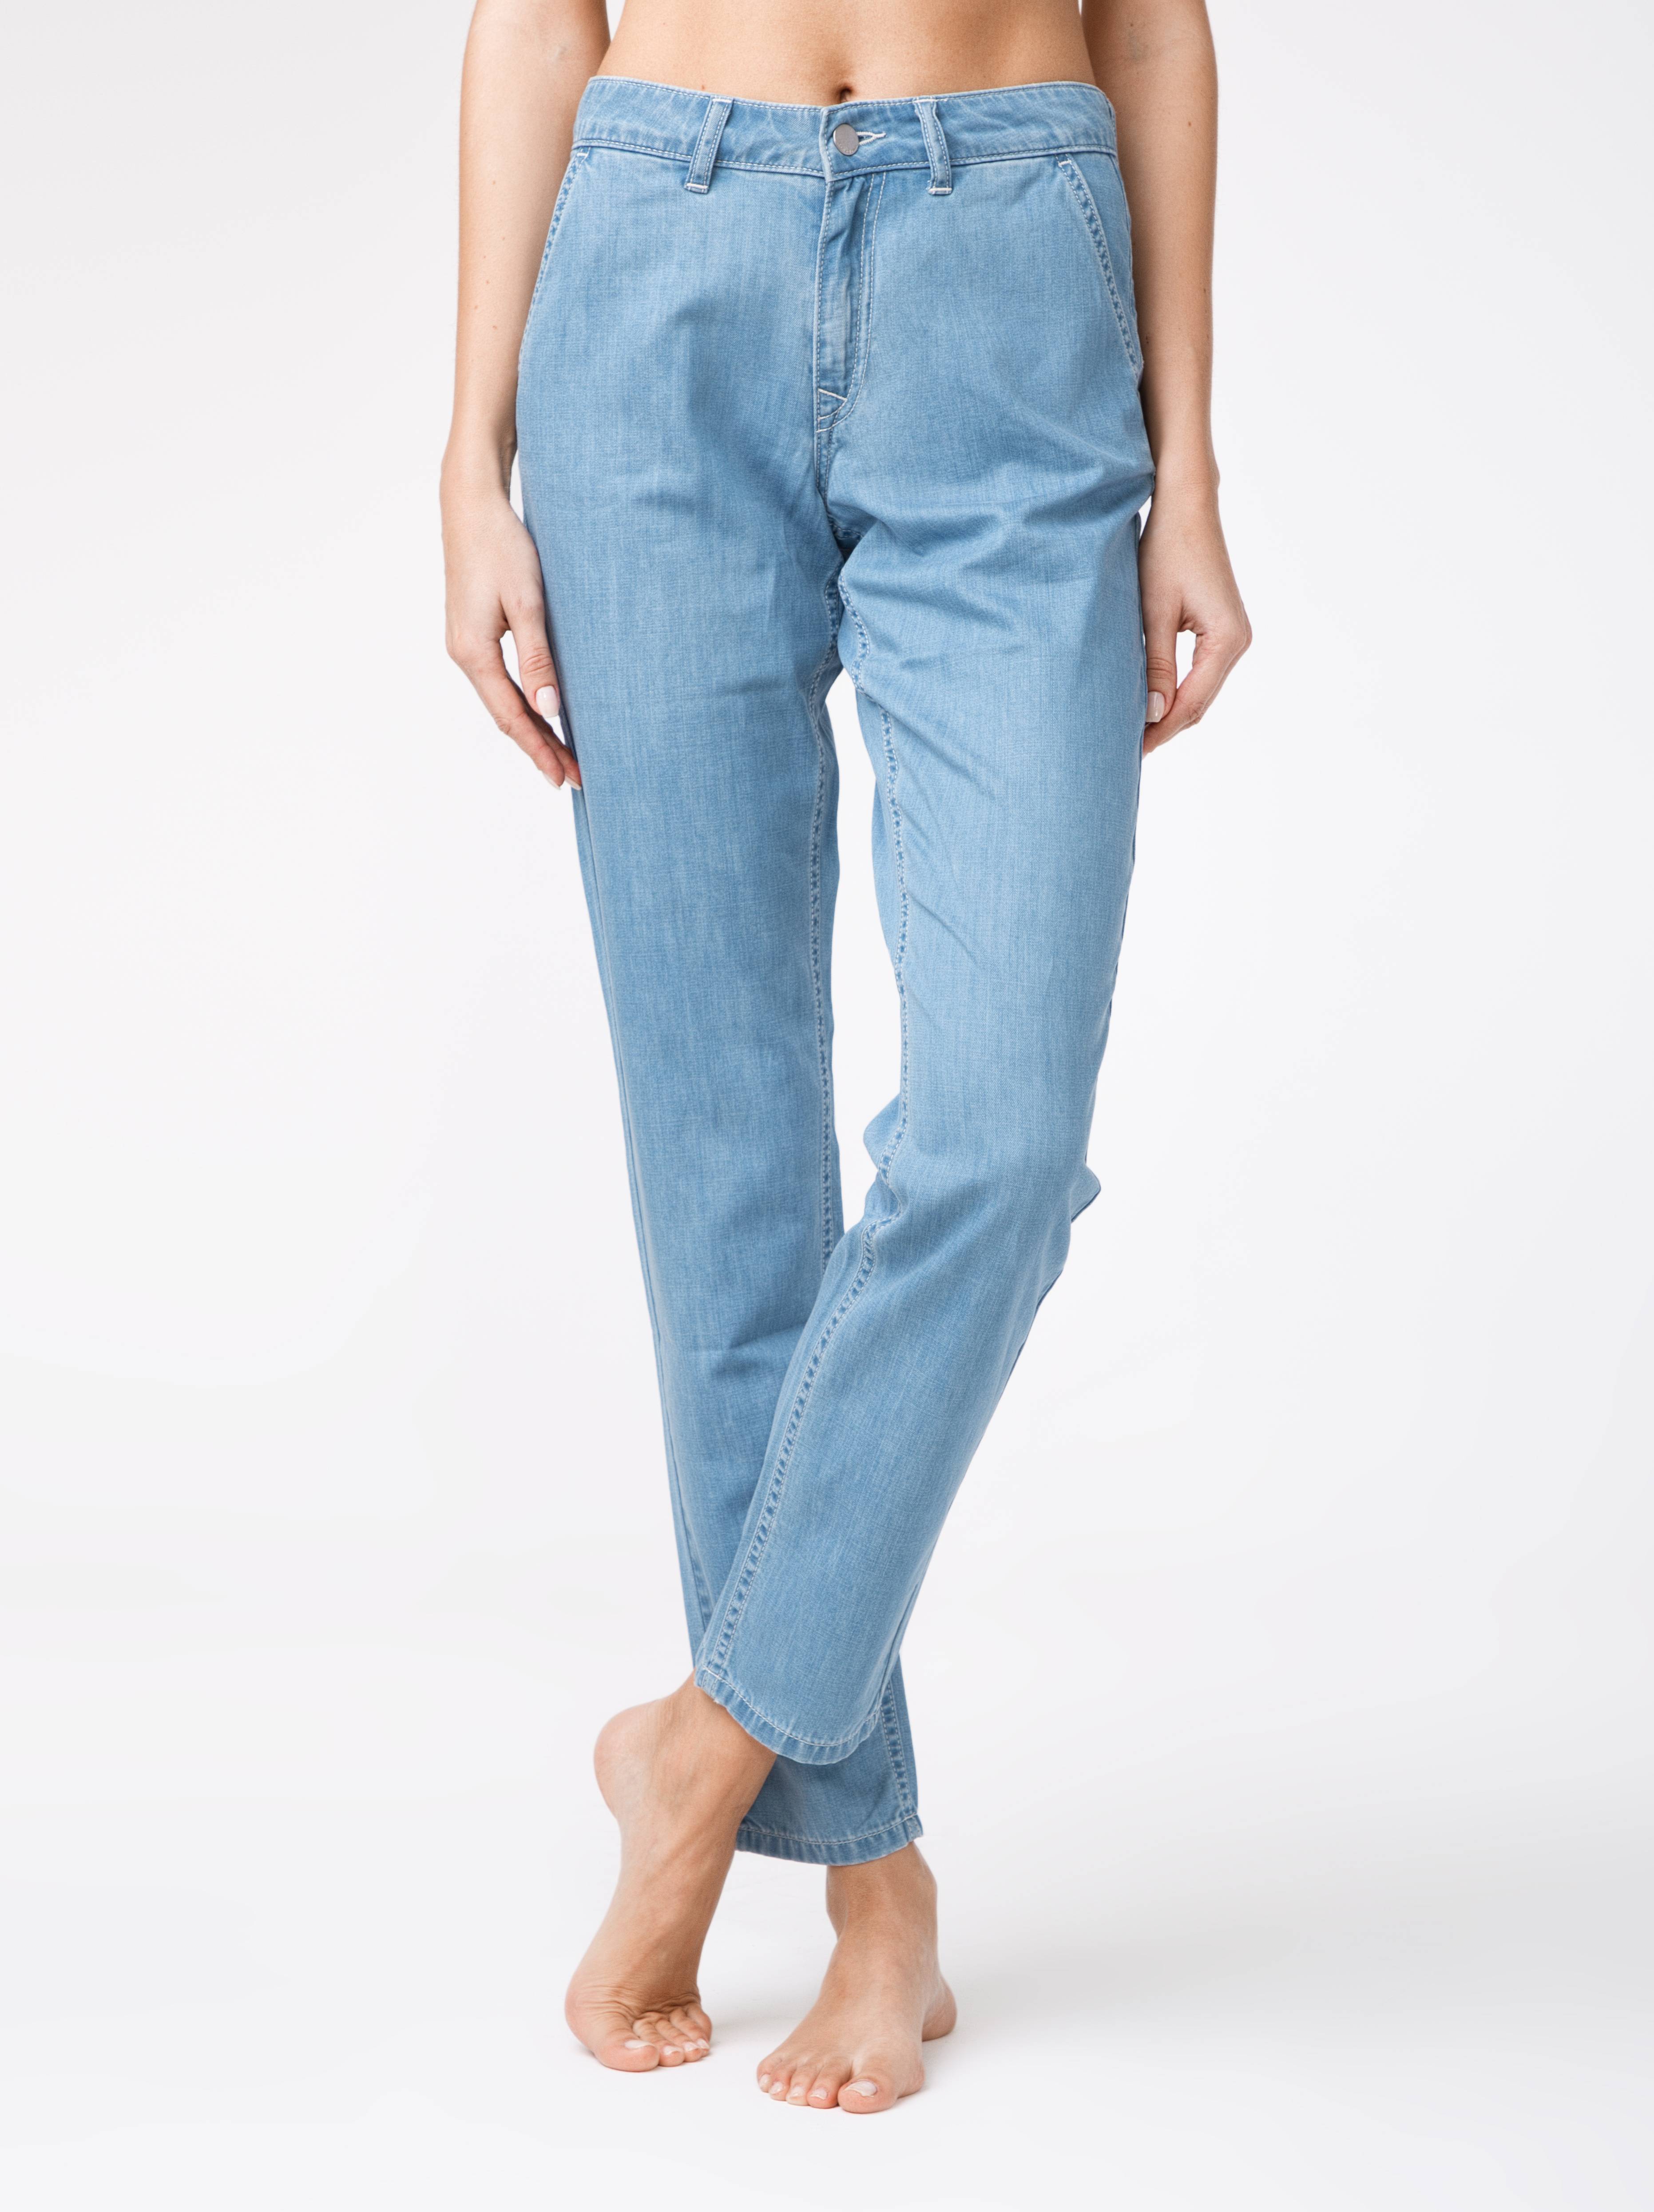 Легкие джинсовые eco-friendly брюки CON-140 Conte ⭐️, цвет bleach blue, размер 164-102 - фото 1